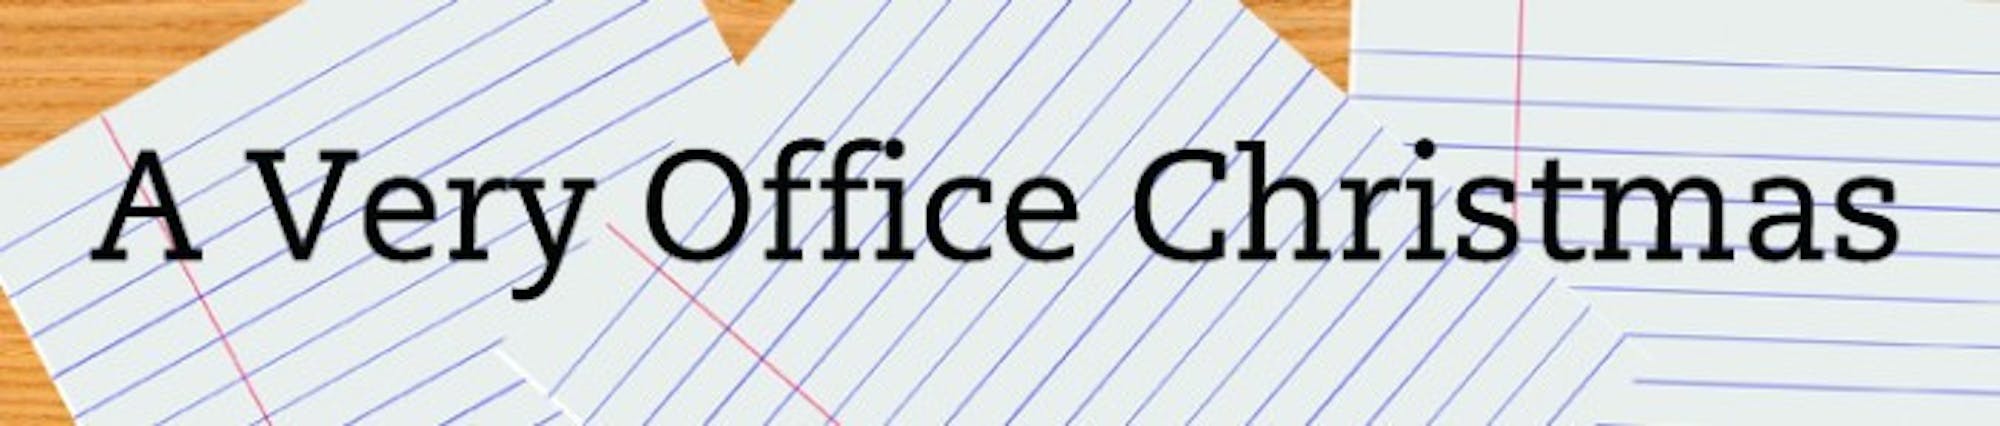 OfficeChristmas_Web